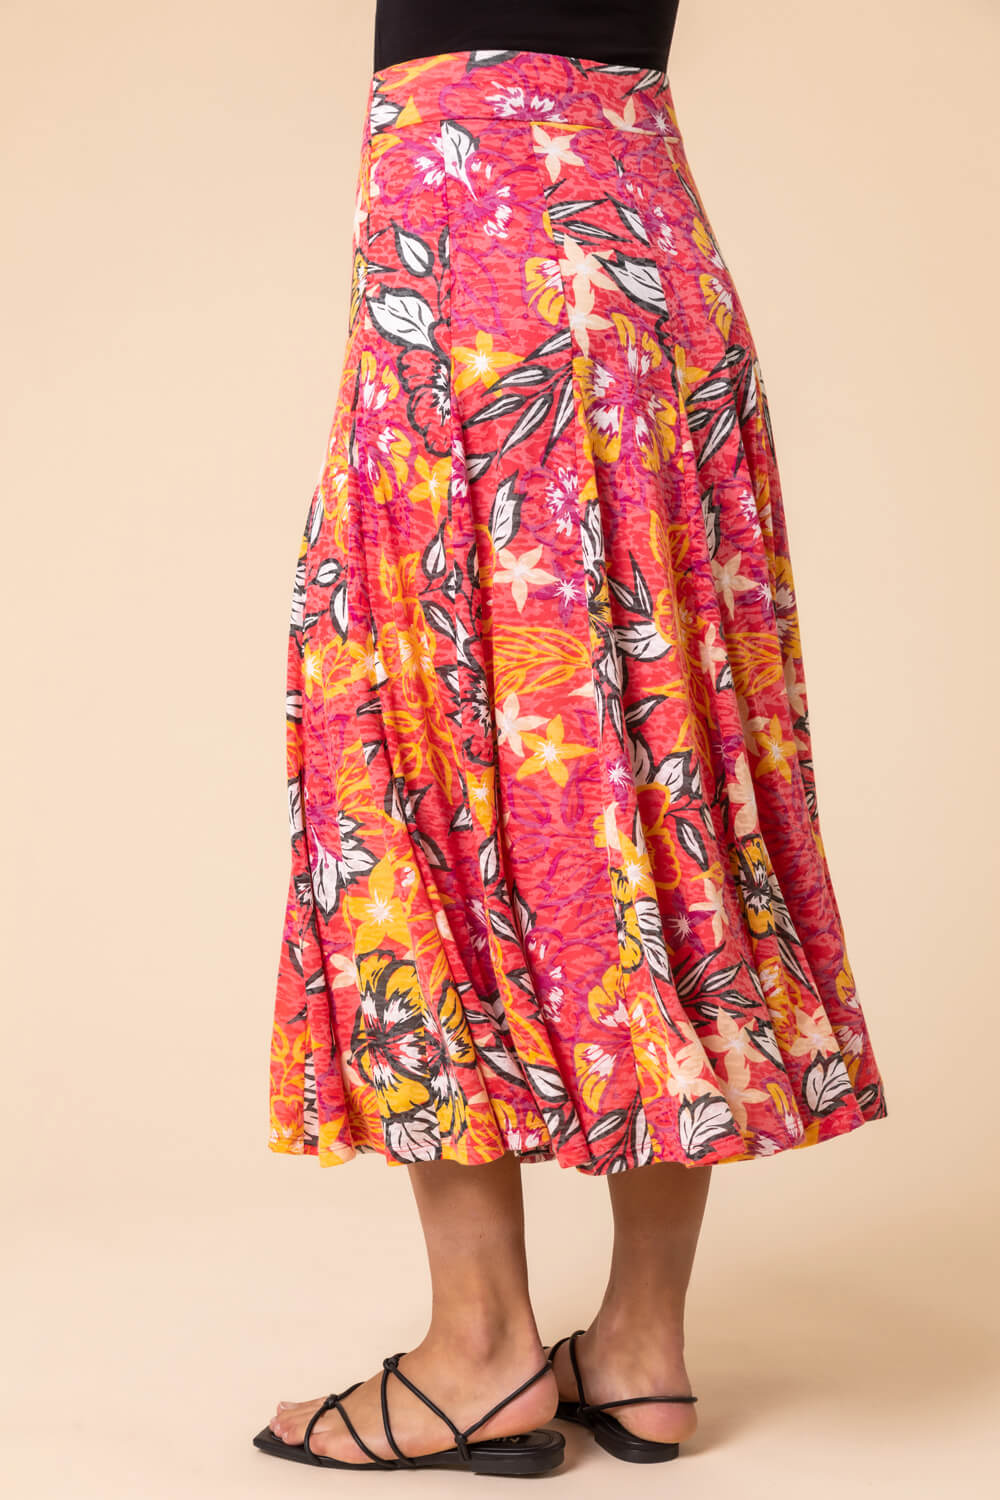 PINK Tropical Floral Burnout Midi Skirt, Image 2 of 4